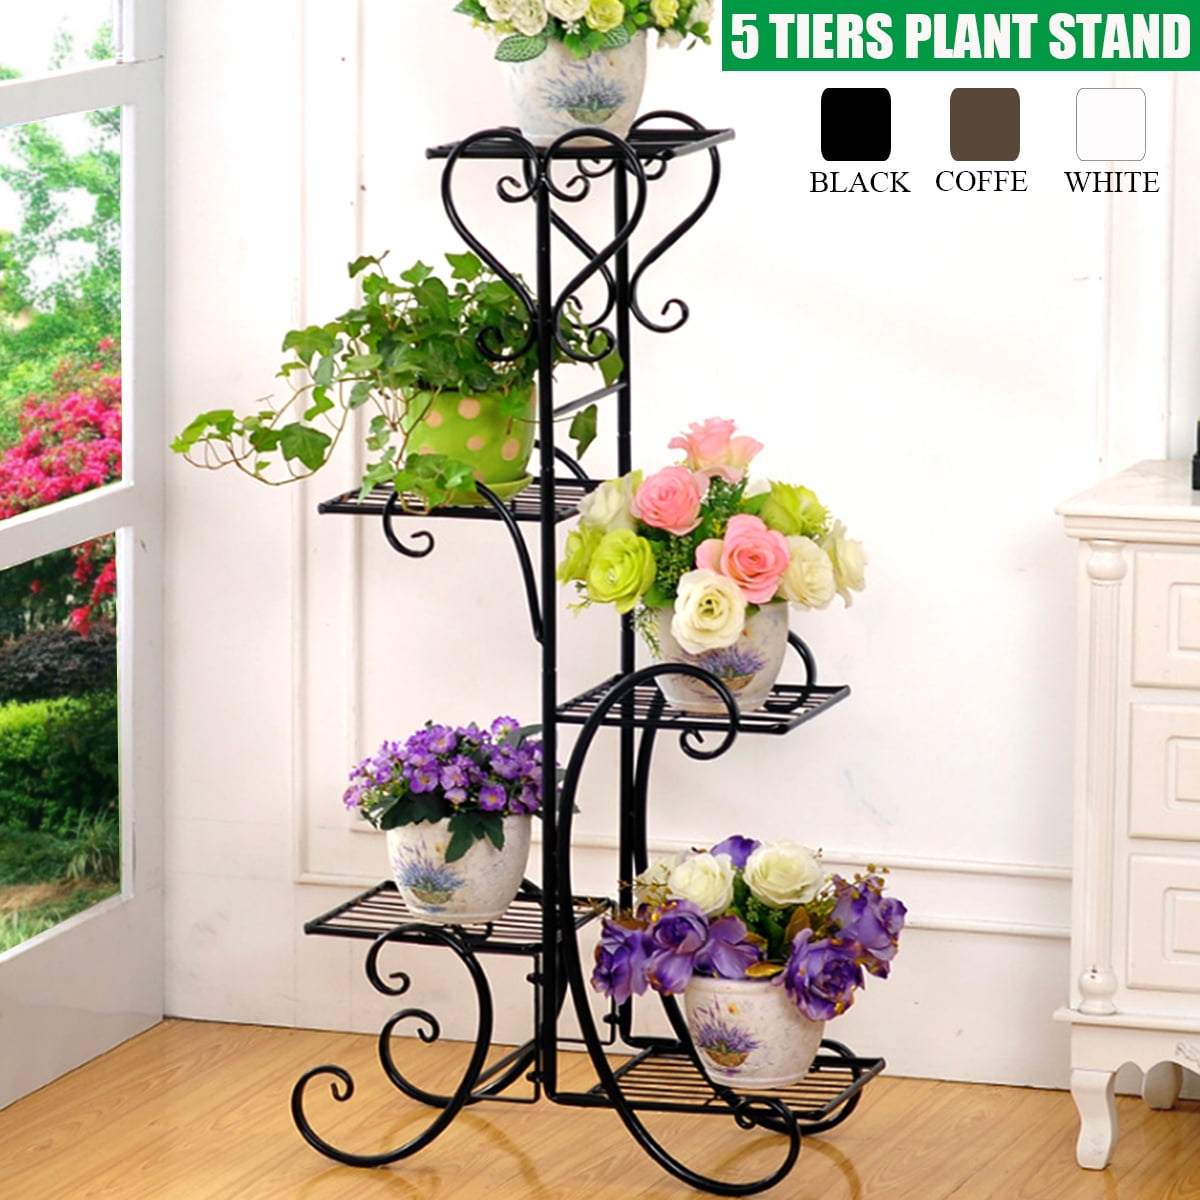 5 Tier Metal Plant Stand Flower Pot Holder Self Garden Patio Home Decor Coffee 